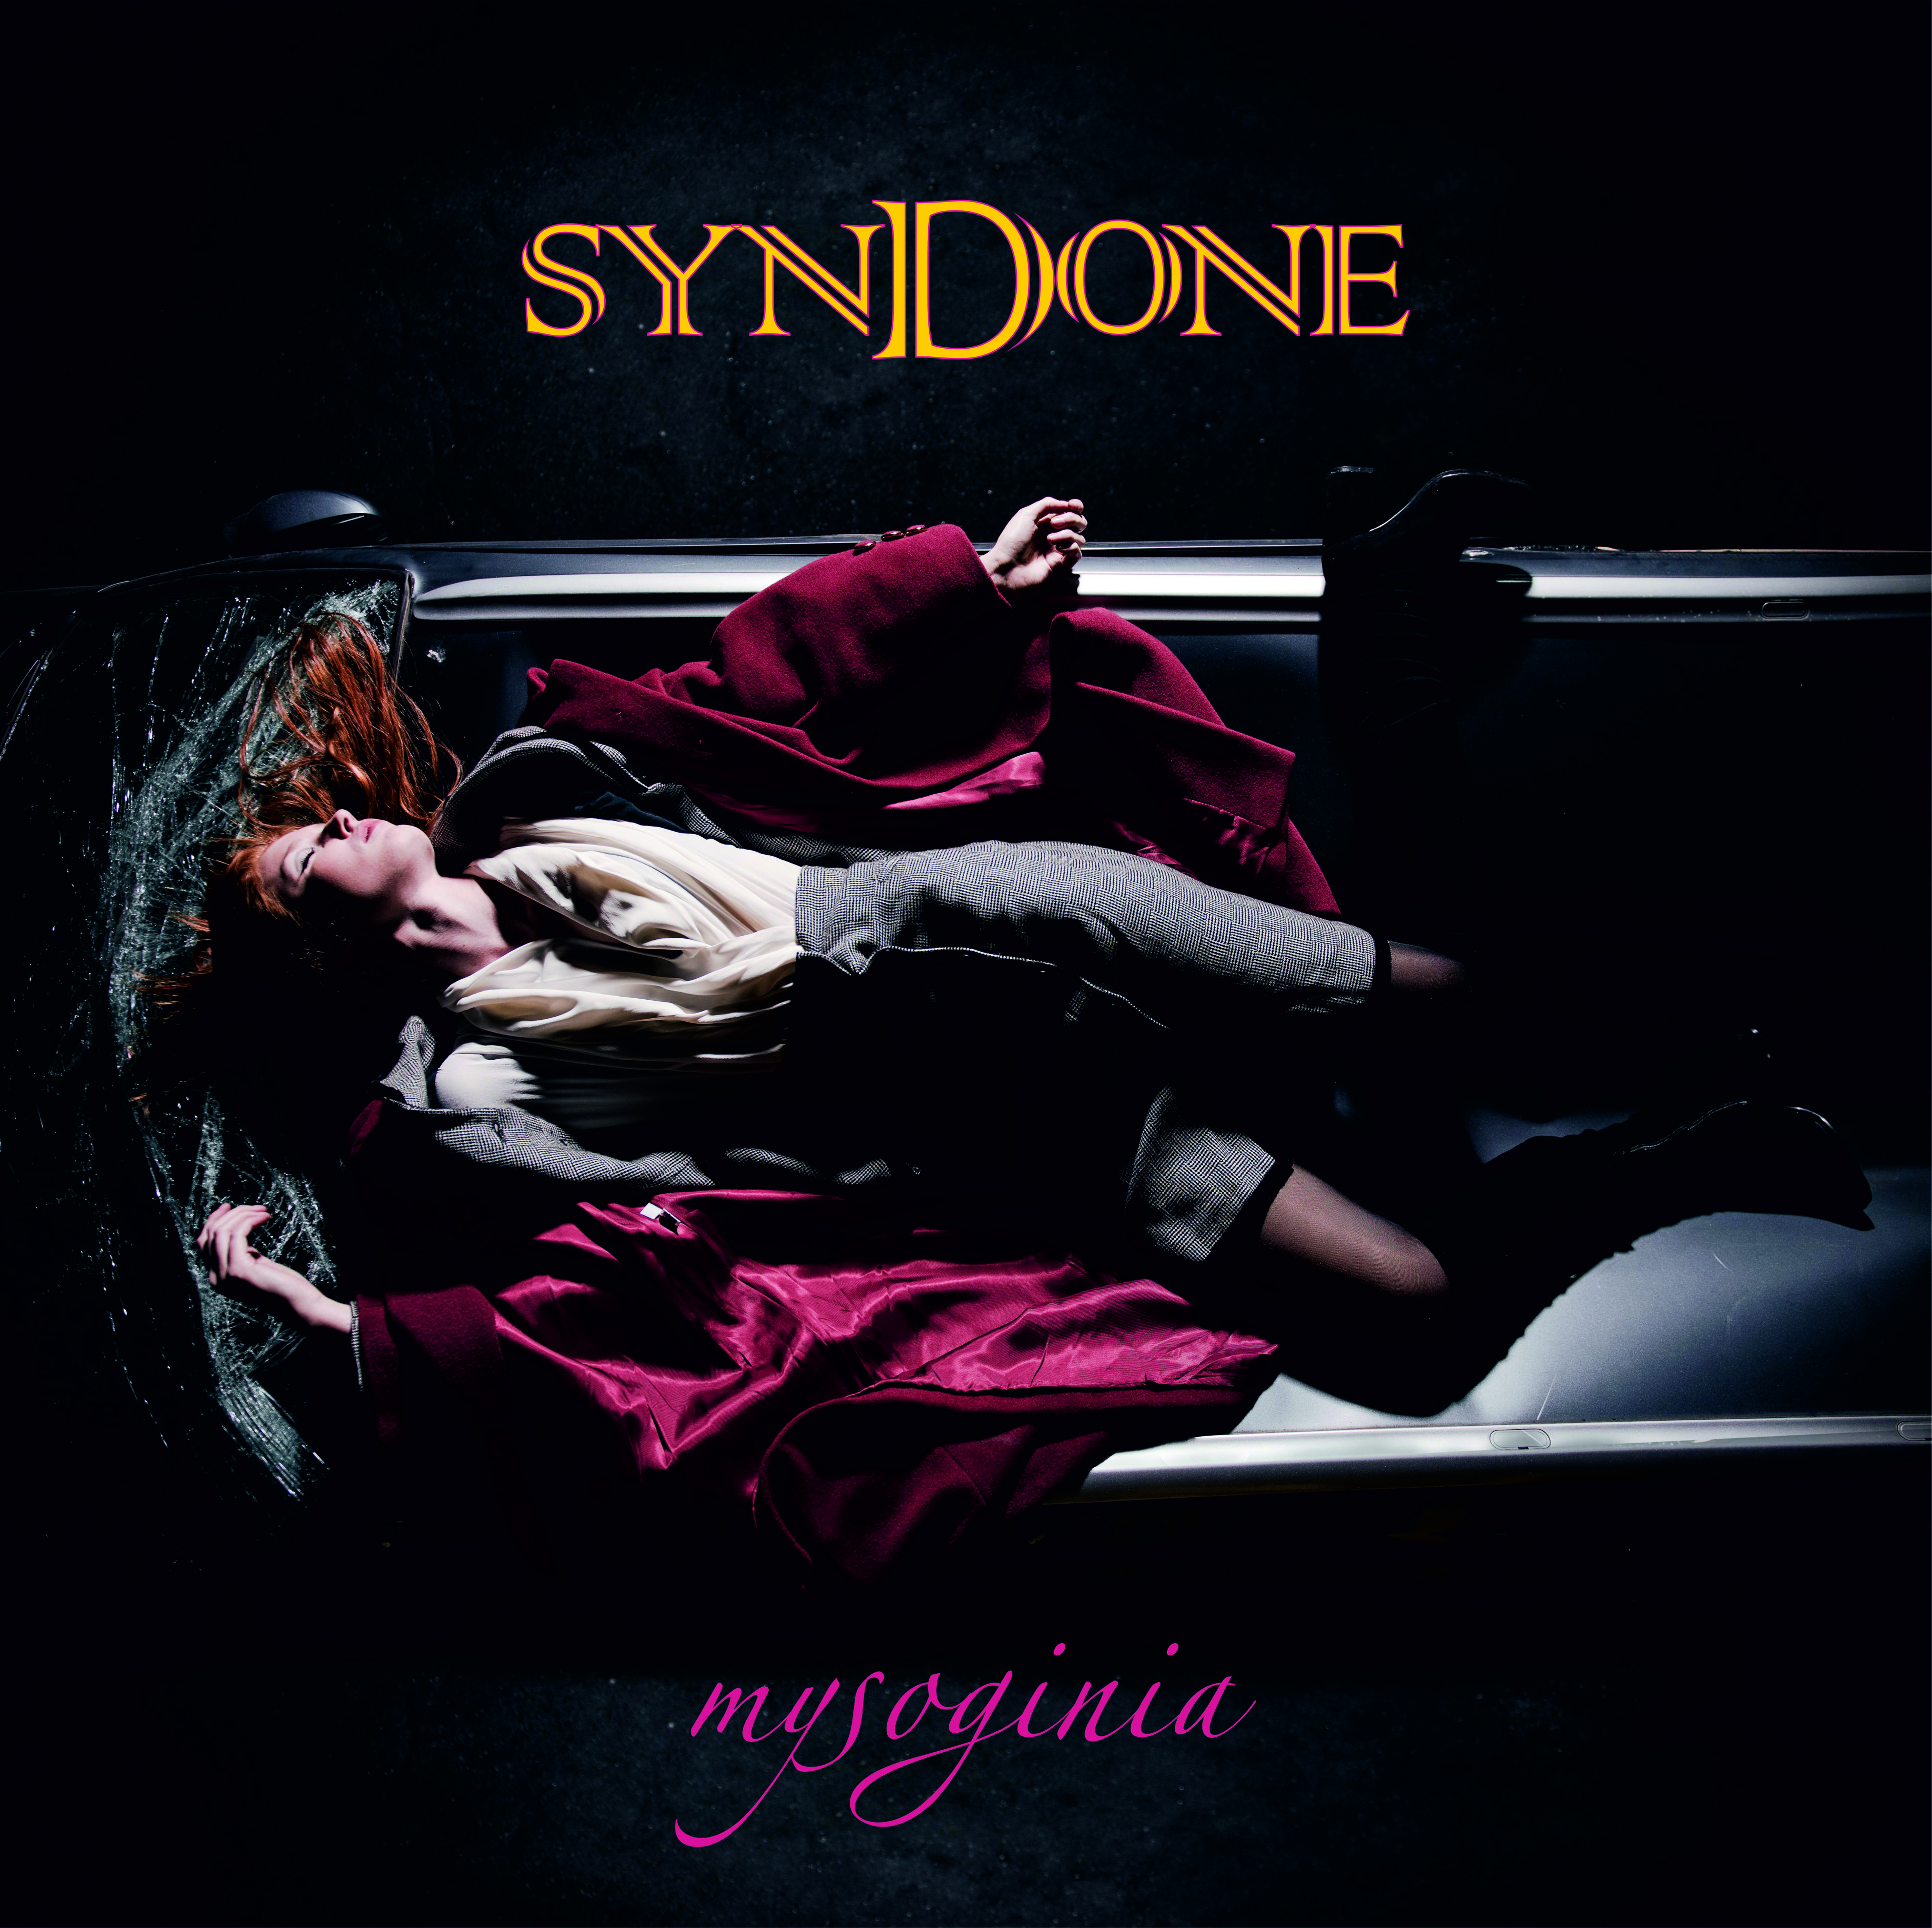 SYNDONE - Mysoginia  CD Digipack